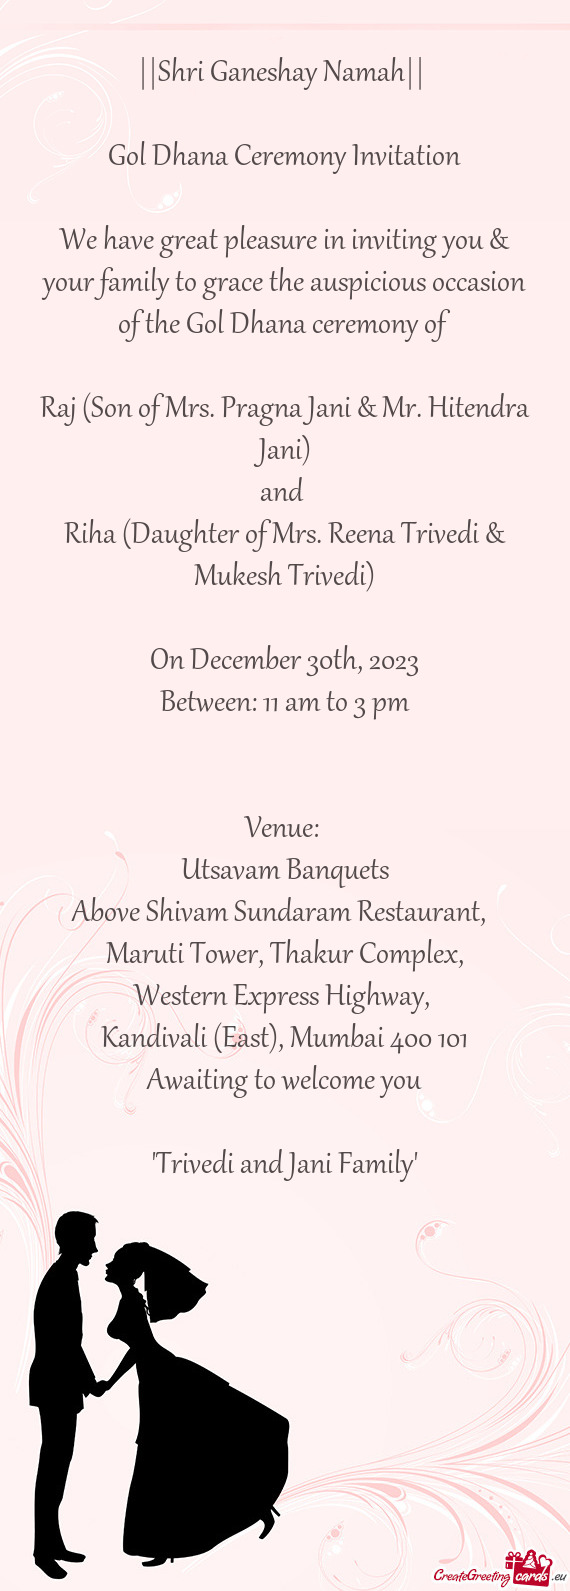 Riha (Daughter of Mrs. Reena Trivedi & Mukesh Trivedi)